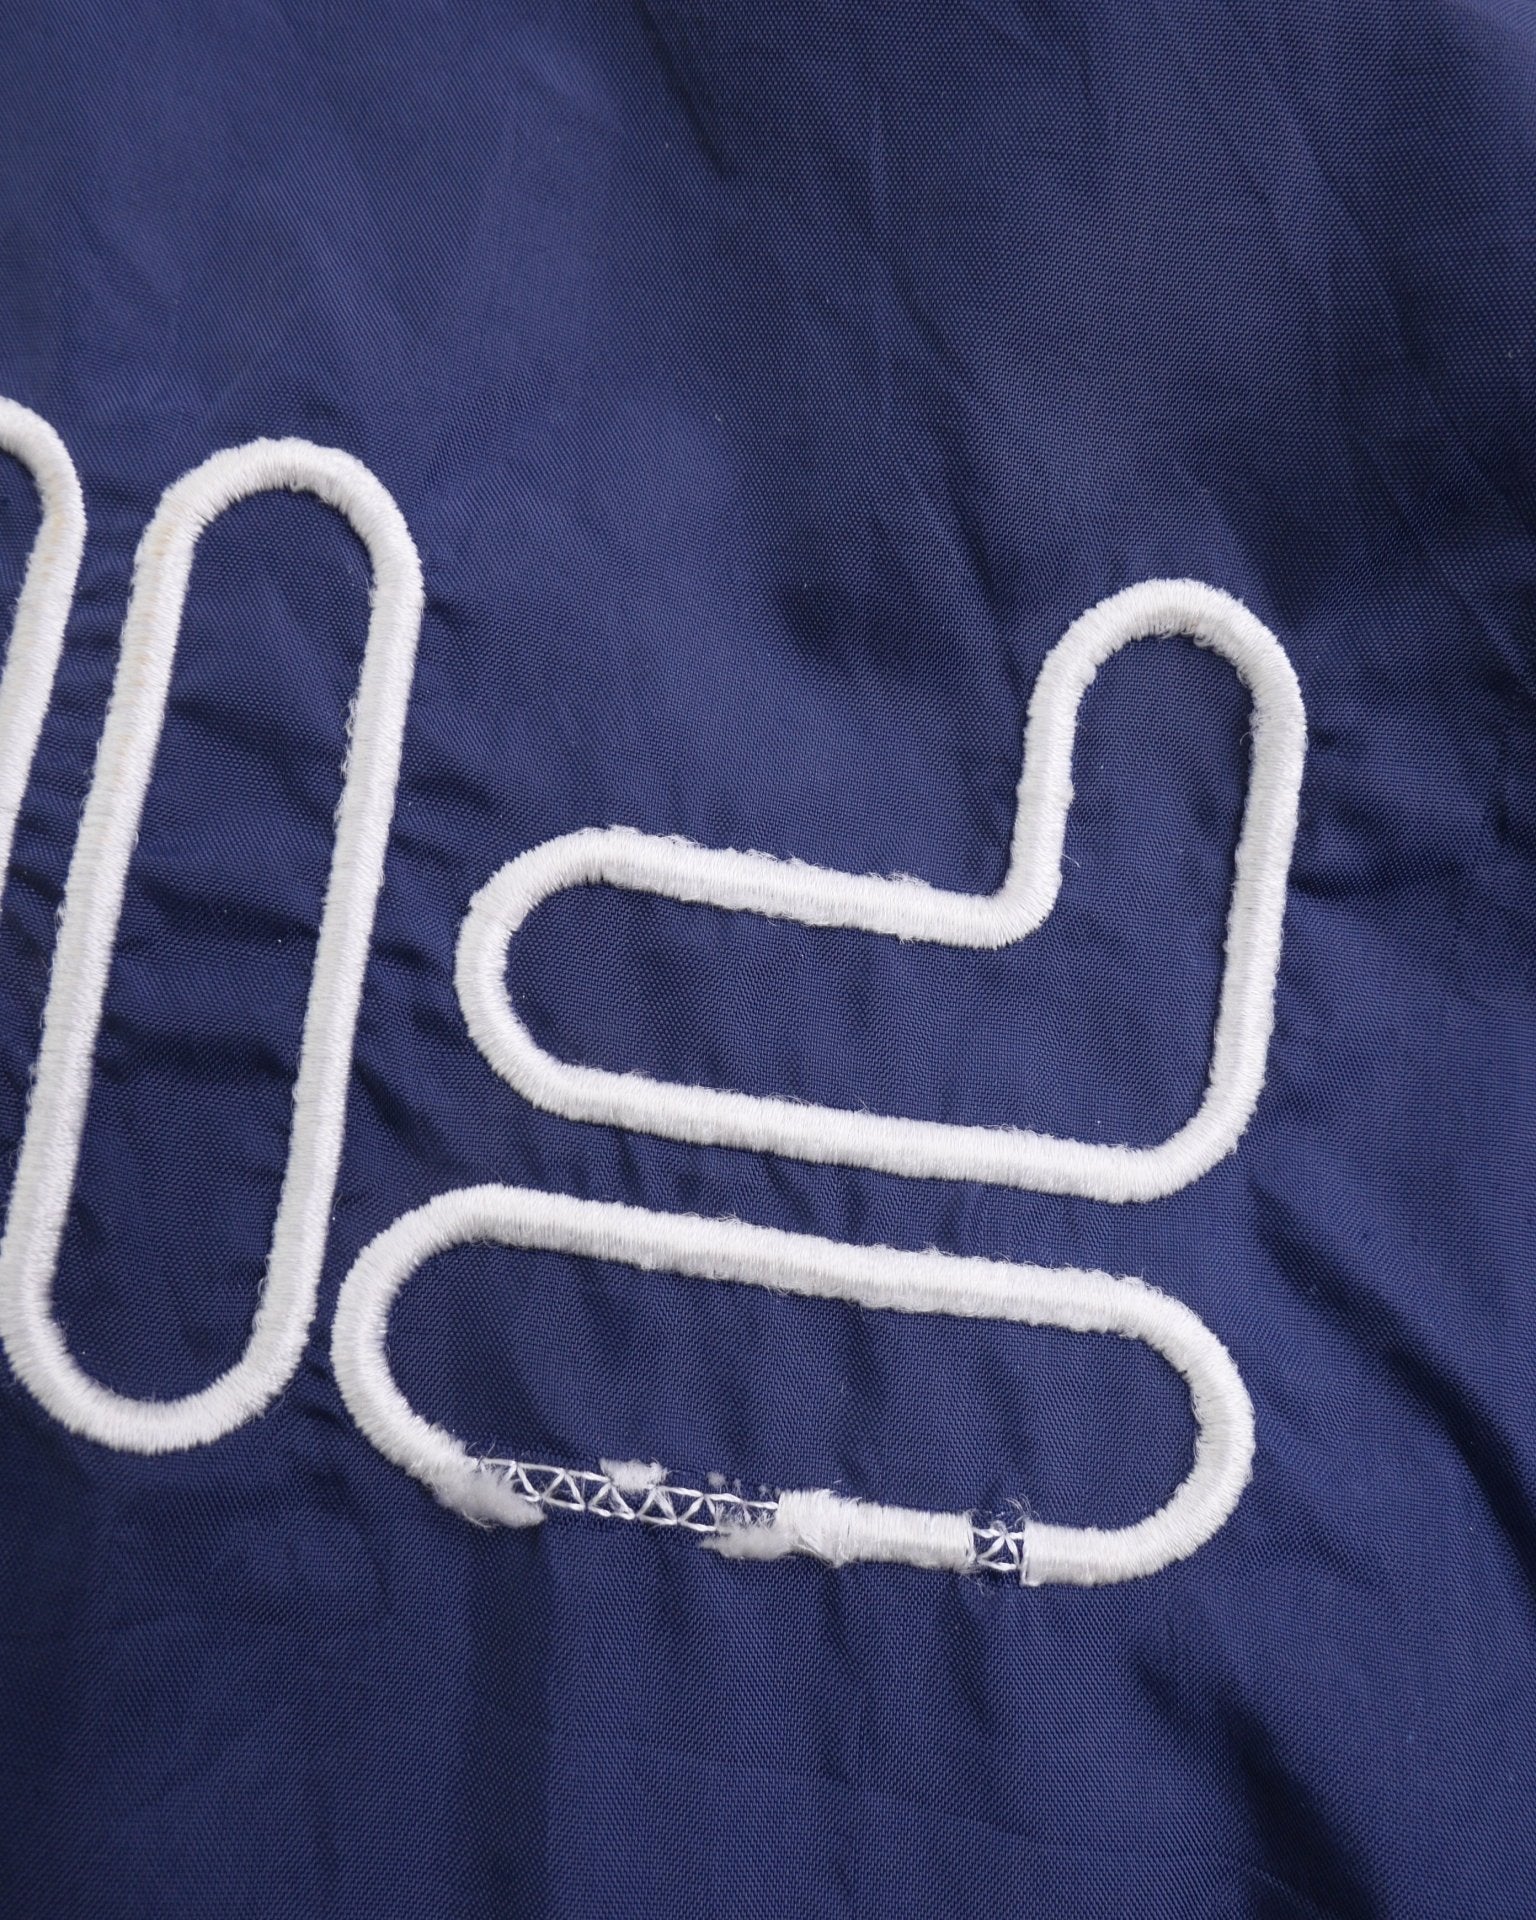 Fila embroidered Logo blue Track Jacke - Peeces